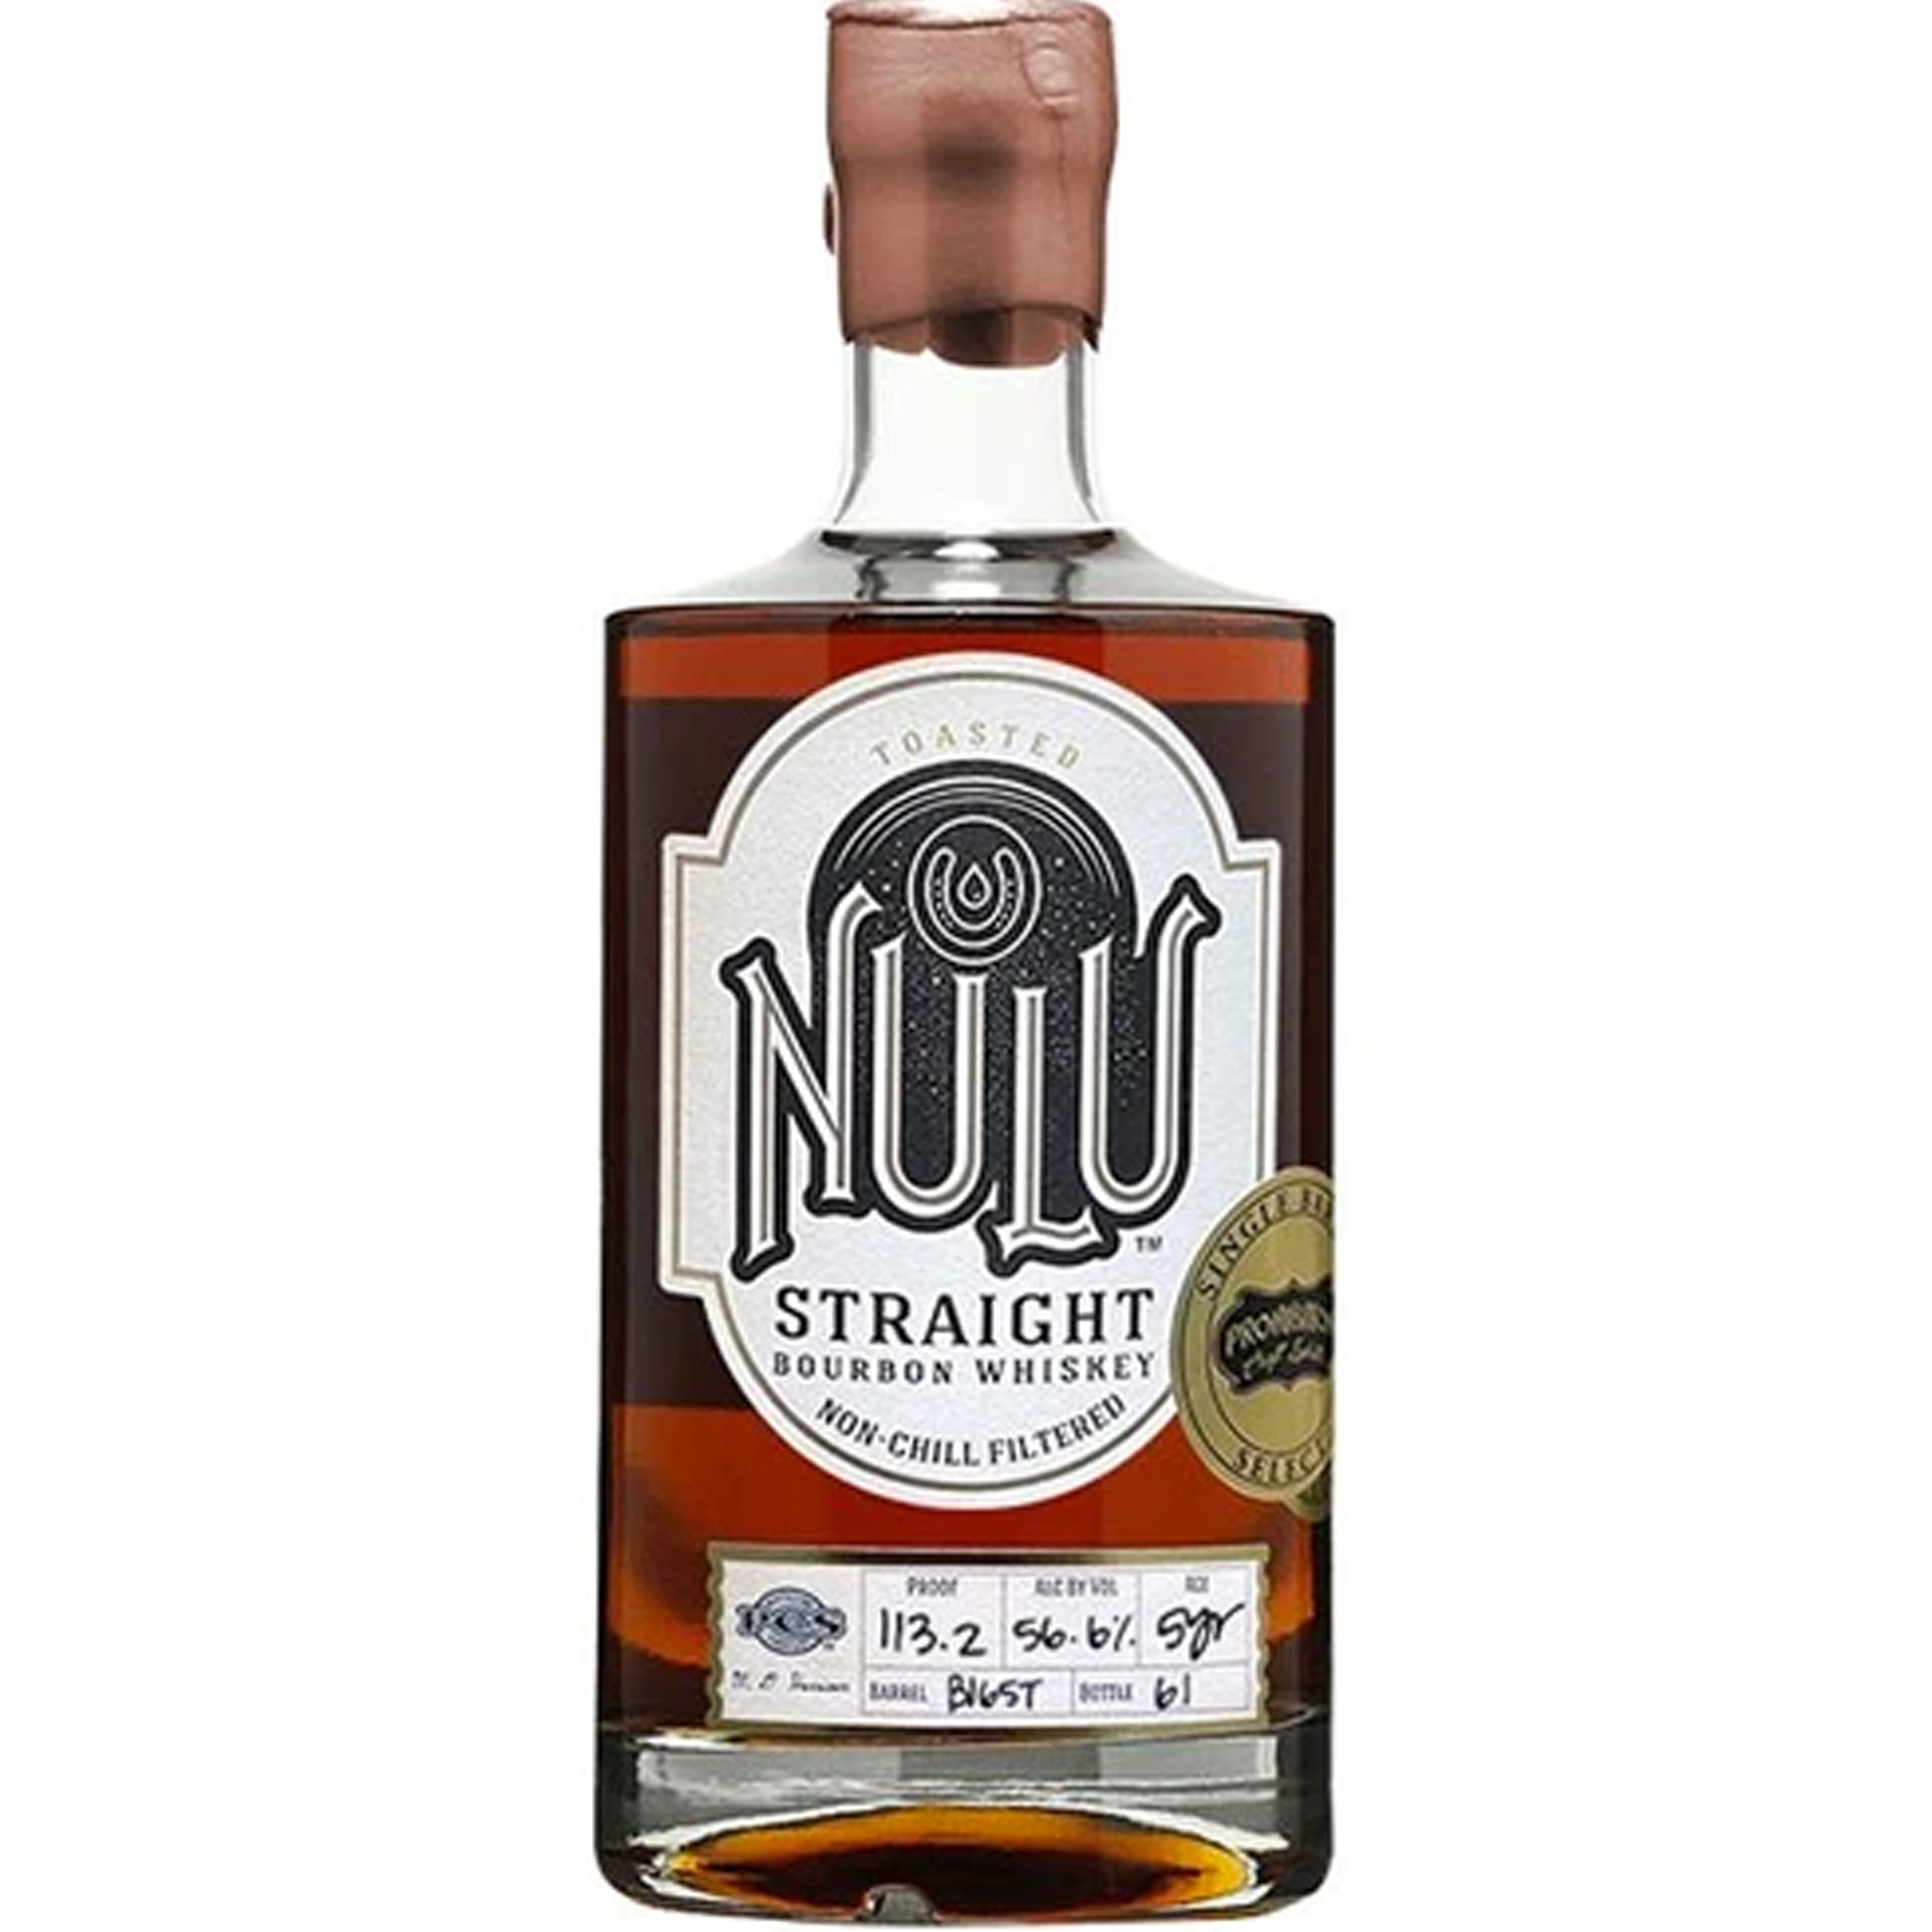 Nulu Toasted Barrel 'Prohibition Craft Spirits' Single Barrel Select Bourbon Whiskey